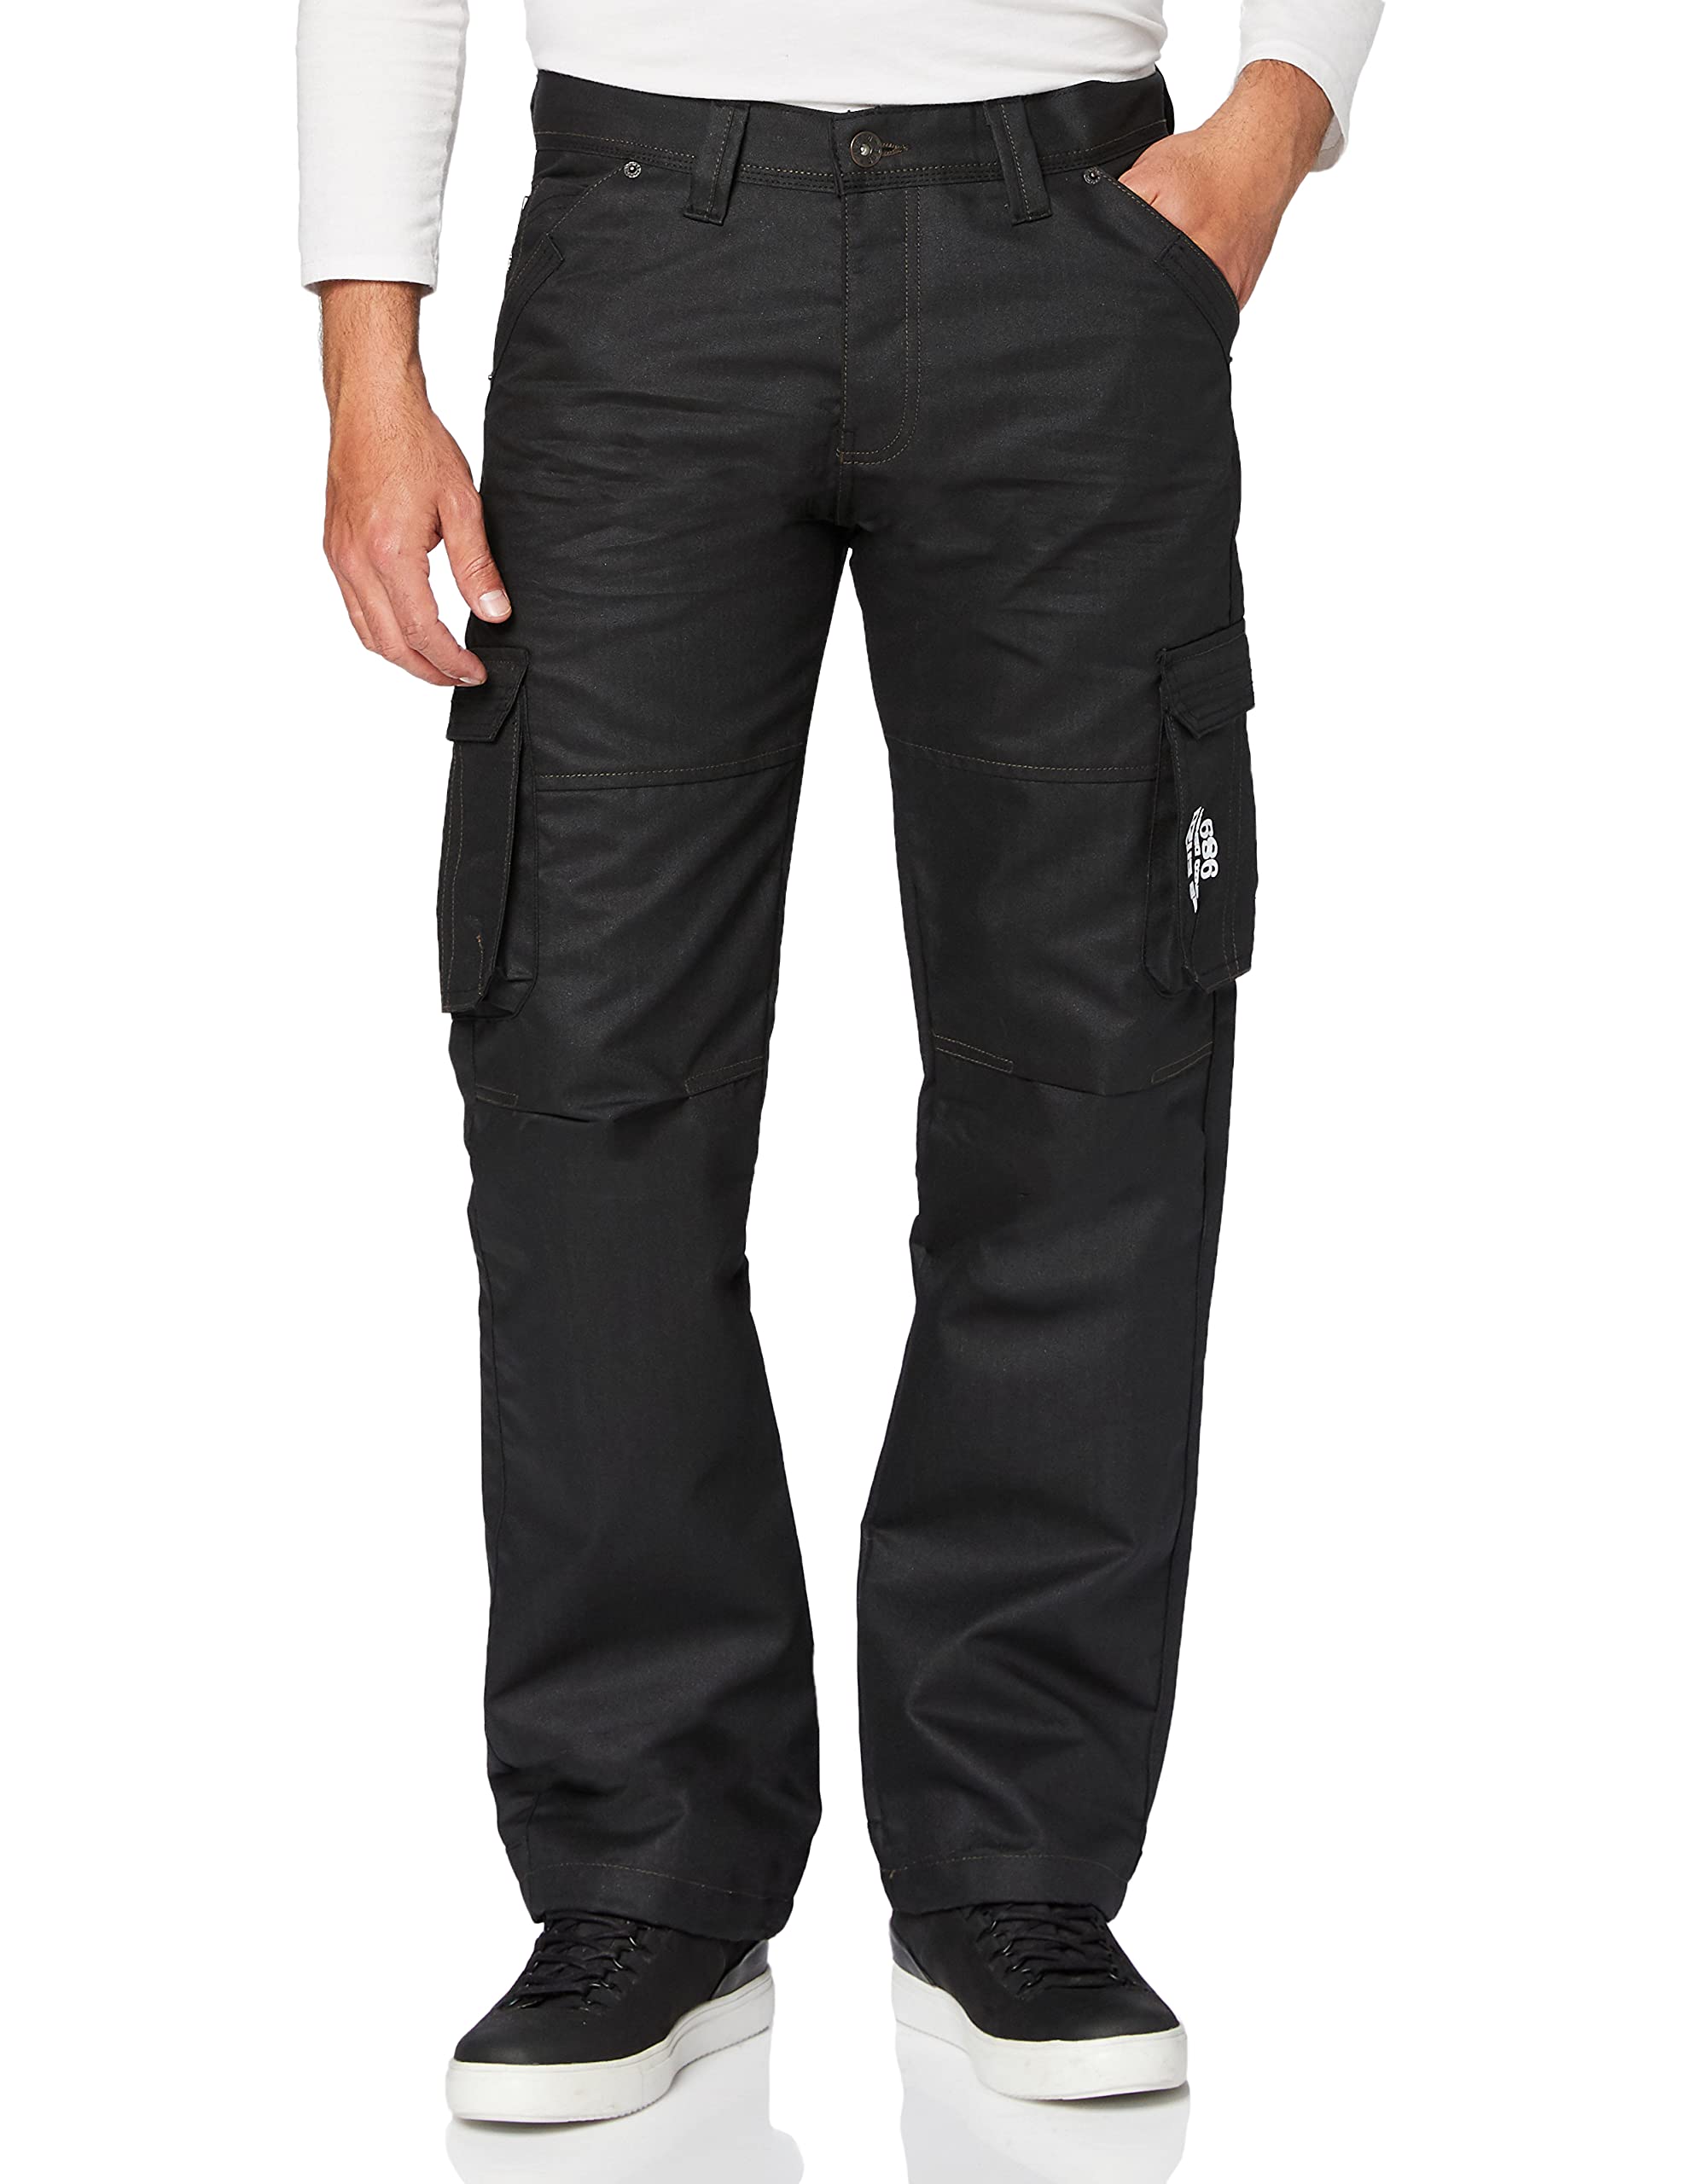 Enzo Herren Ez08 Blk Loose Fit Jeans, Schwarz (Black Black Coated), 38W / 32L